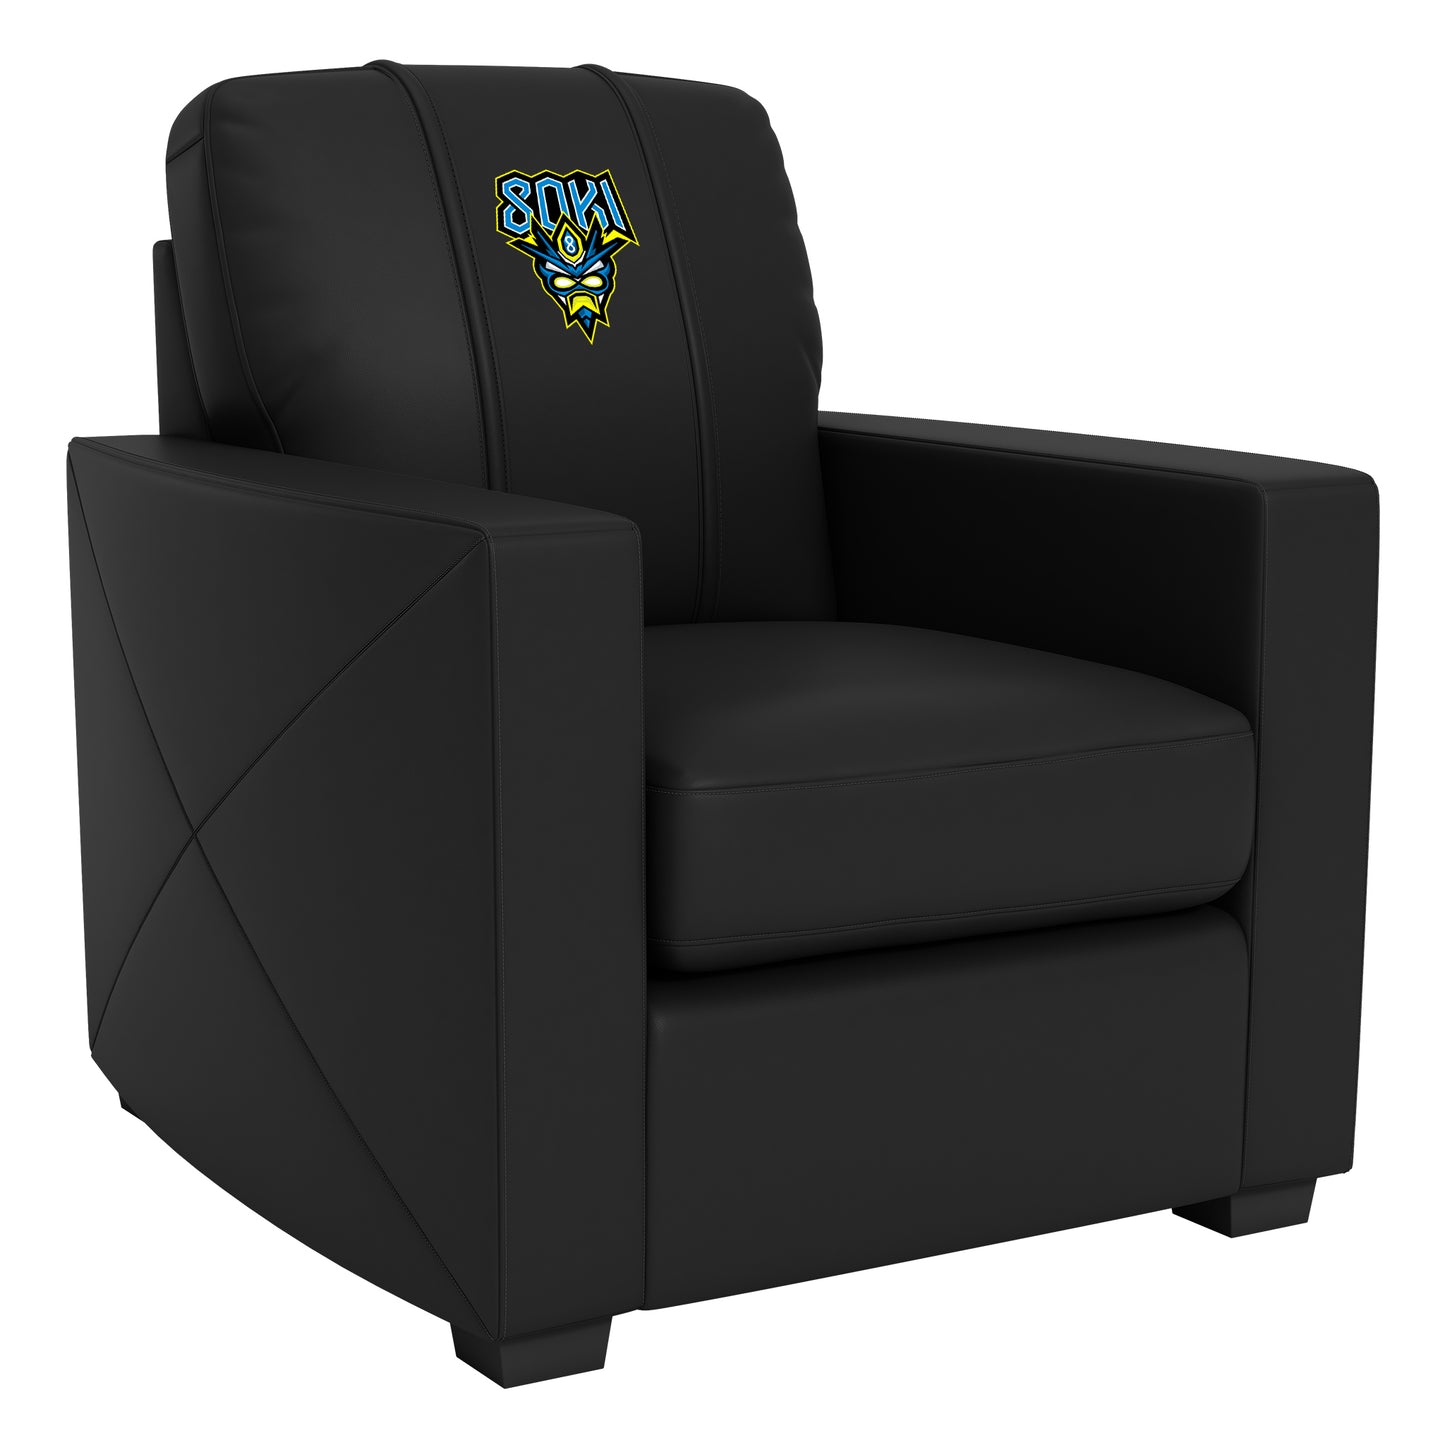 Silver Club Chair with 8oki Primary Logo